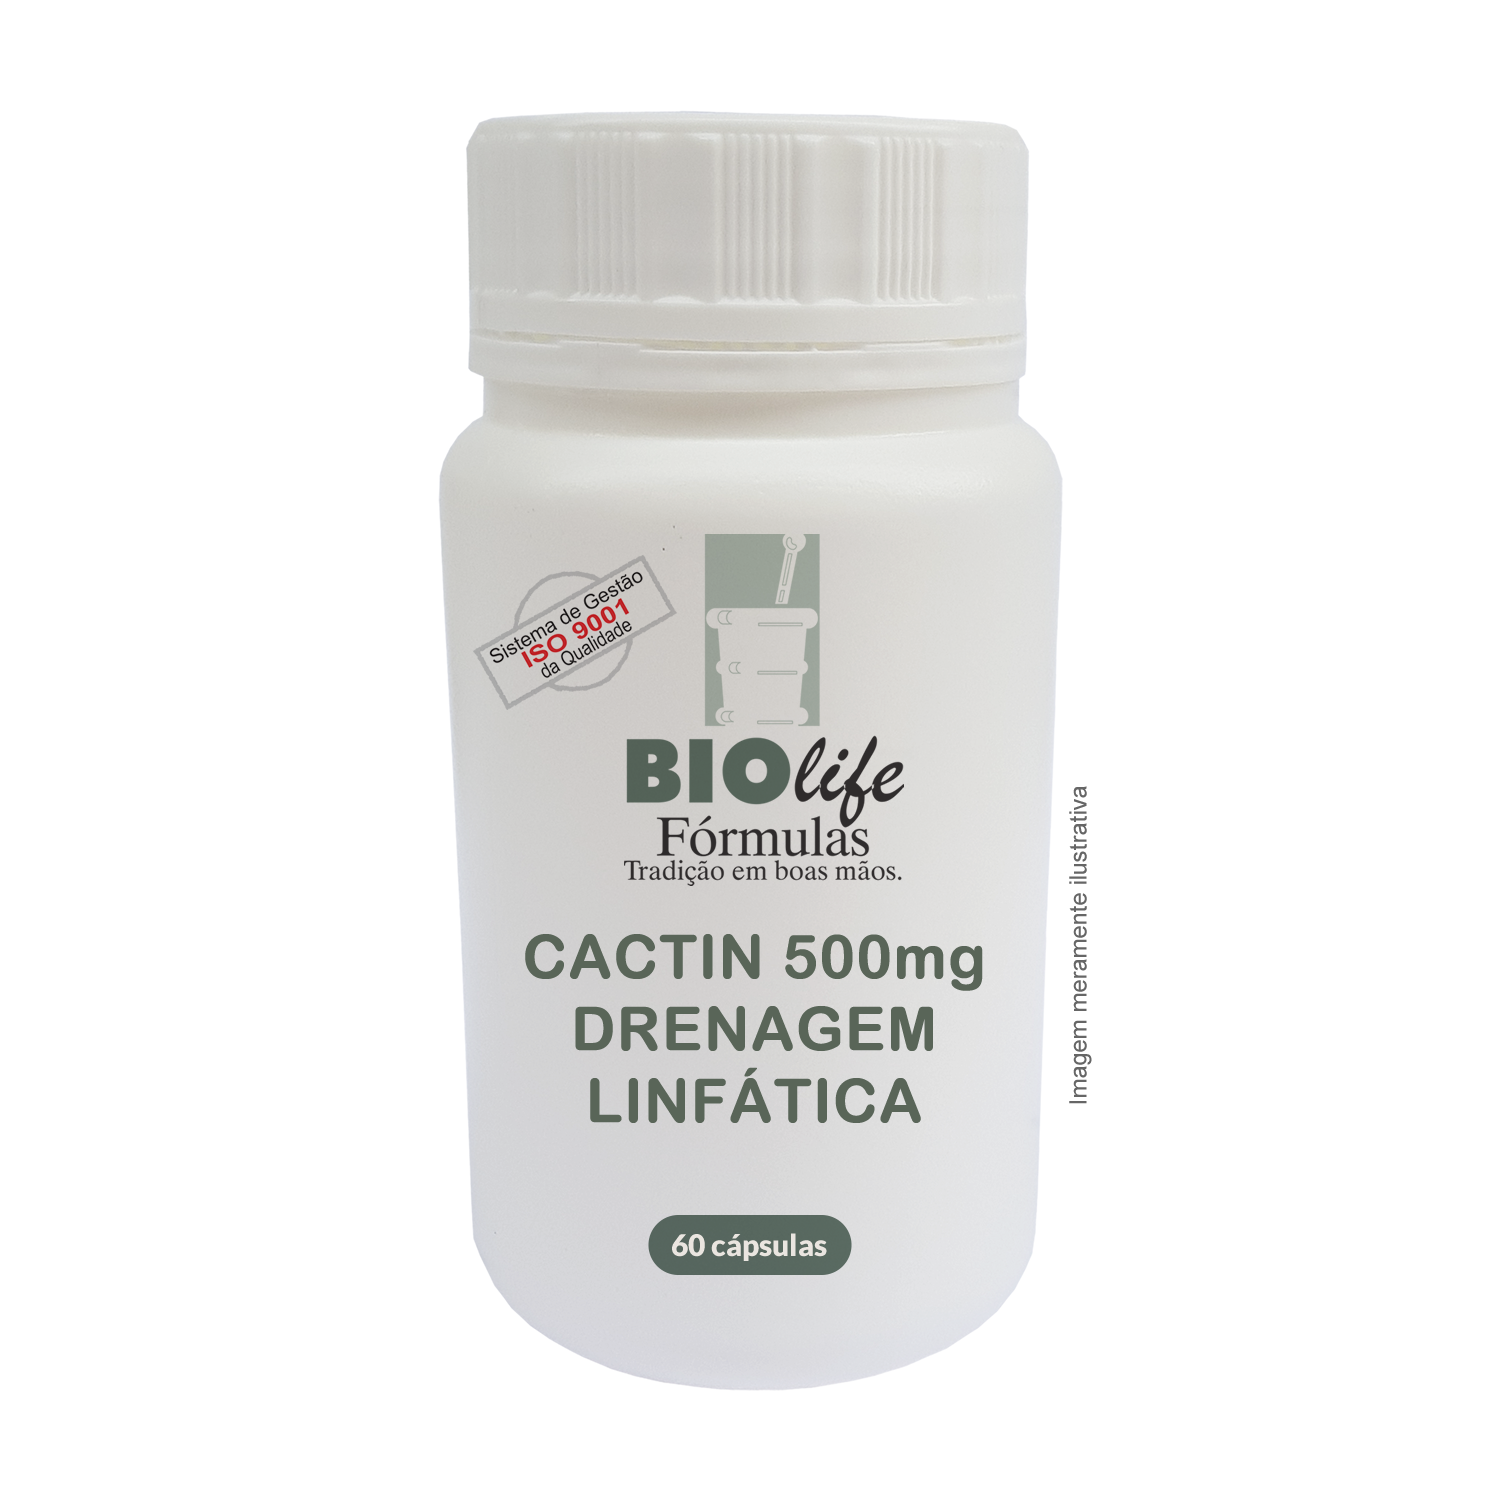 CACTIN - DRENAGEM LINFÁTICA - BioLife